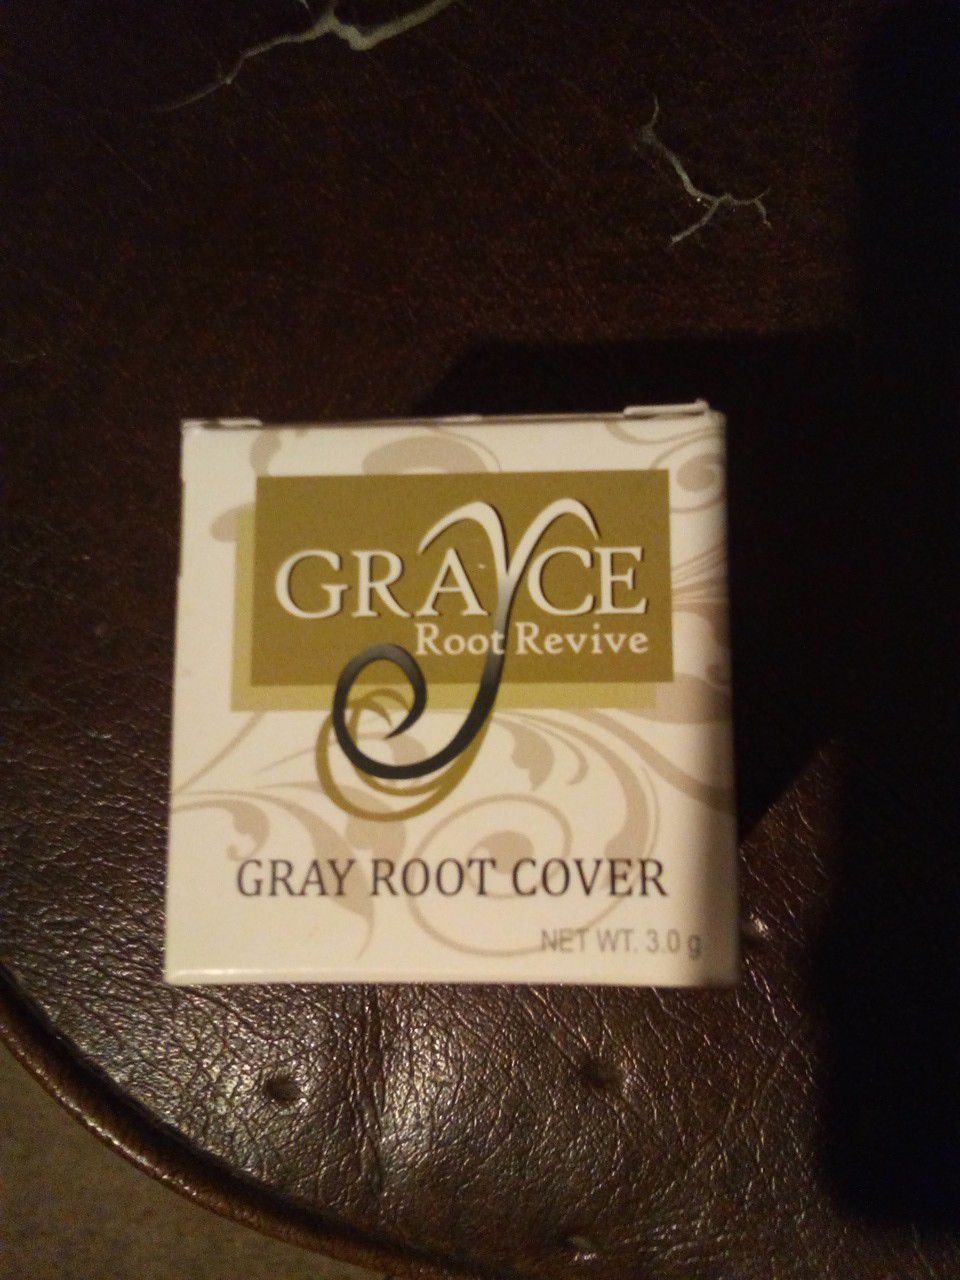 Grayce root cover